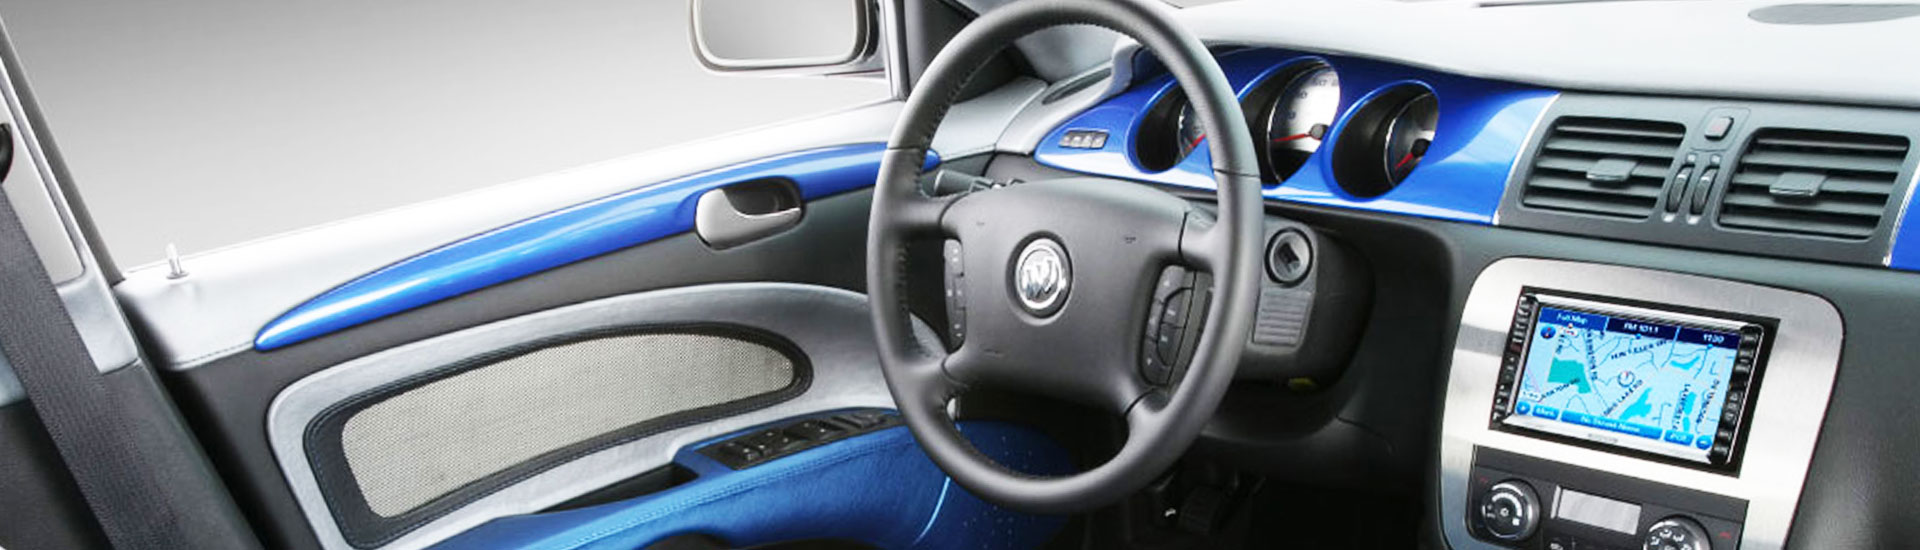 2016 Buick Verano Dash Kits